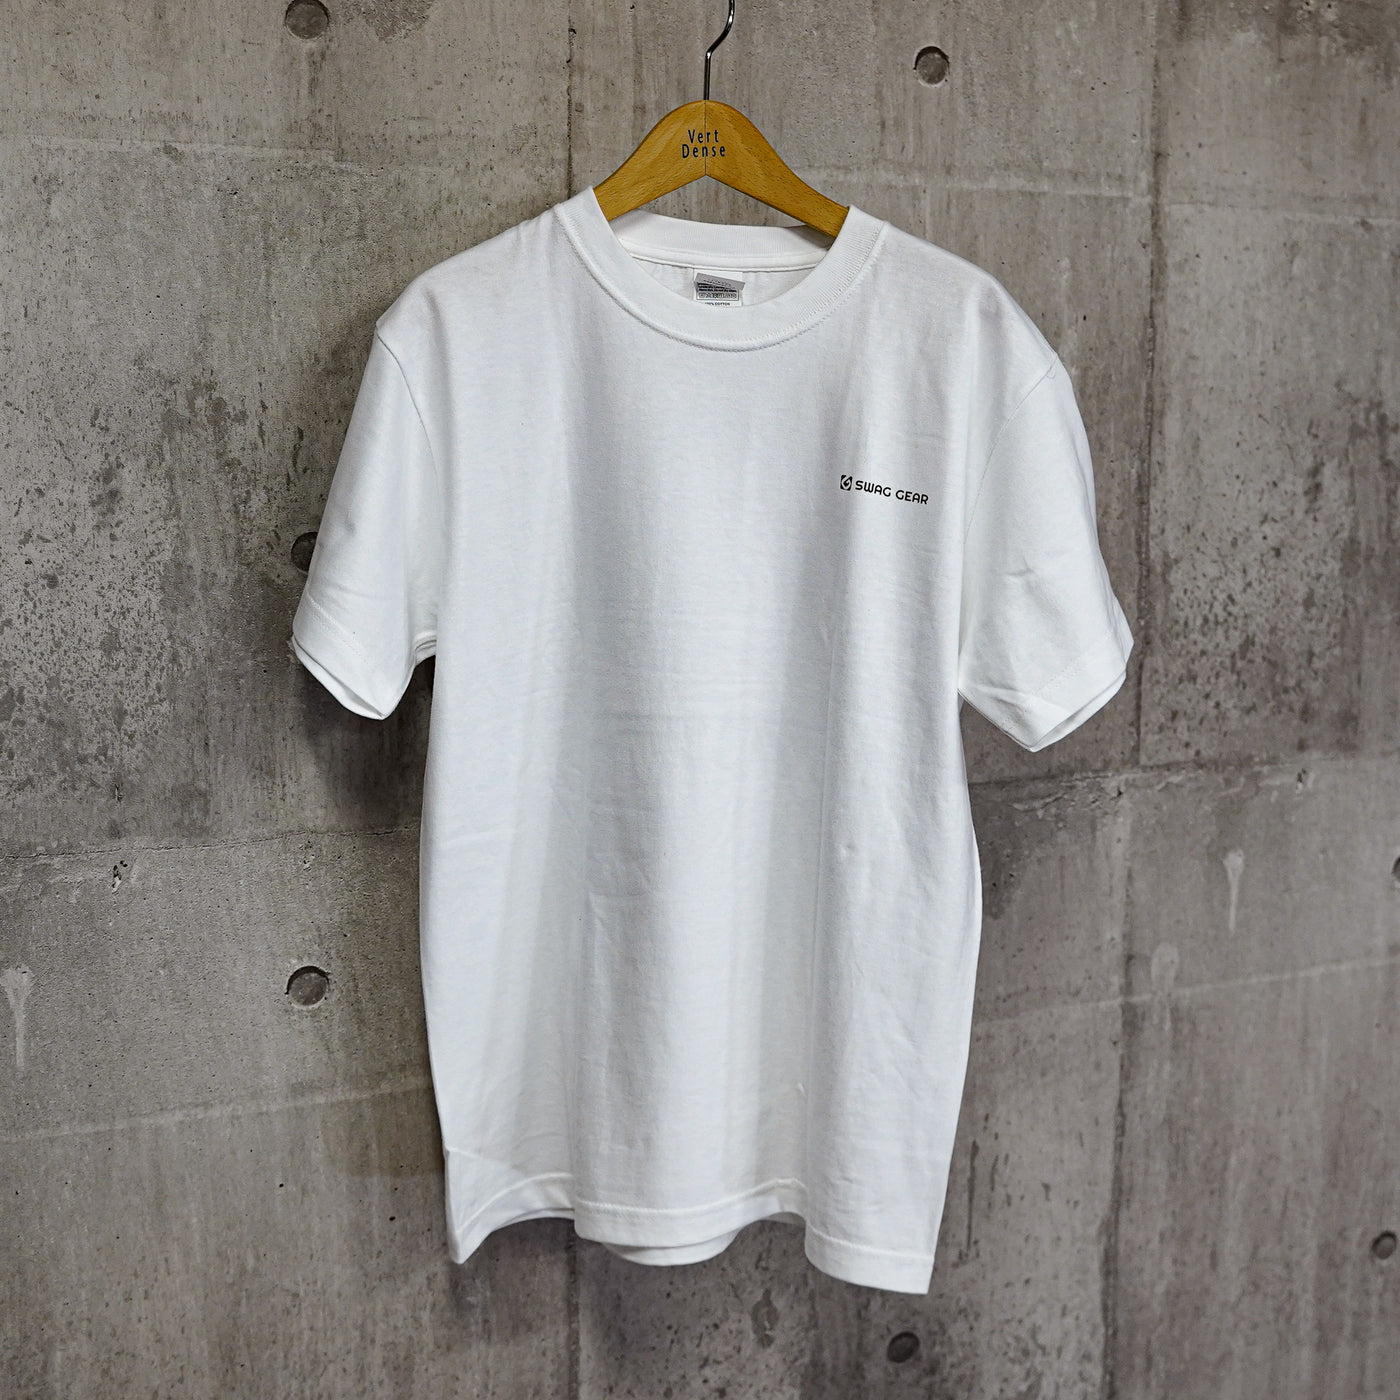 GR Uniforma Printed Jersey T-Shirt